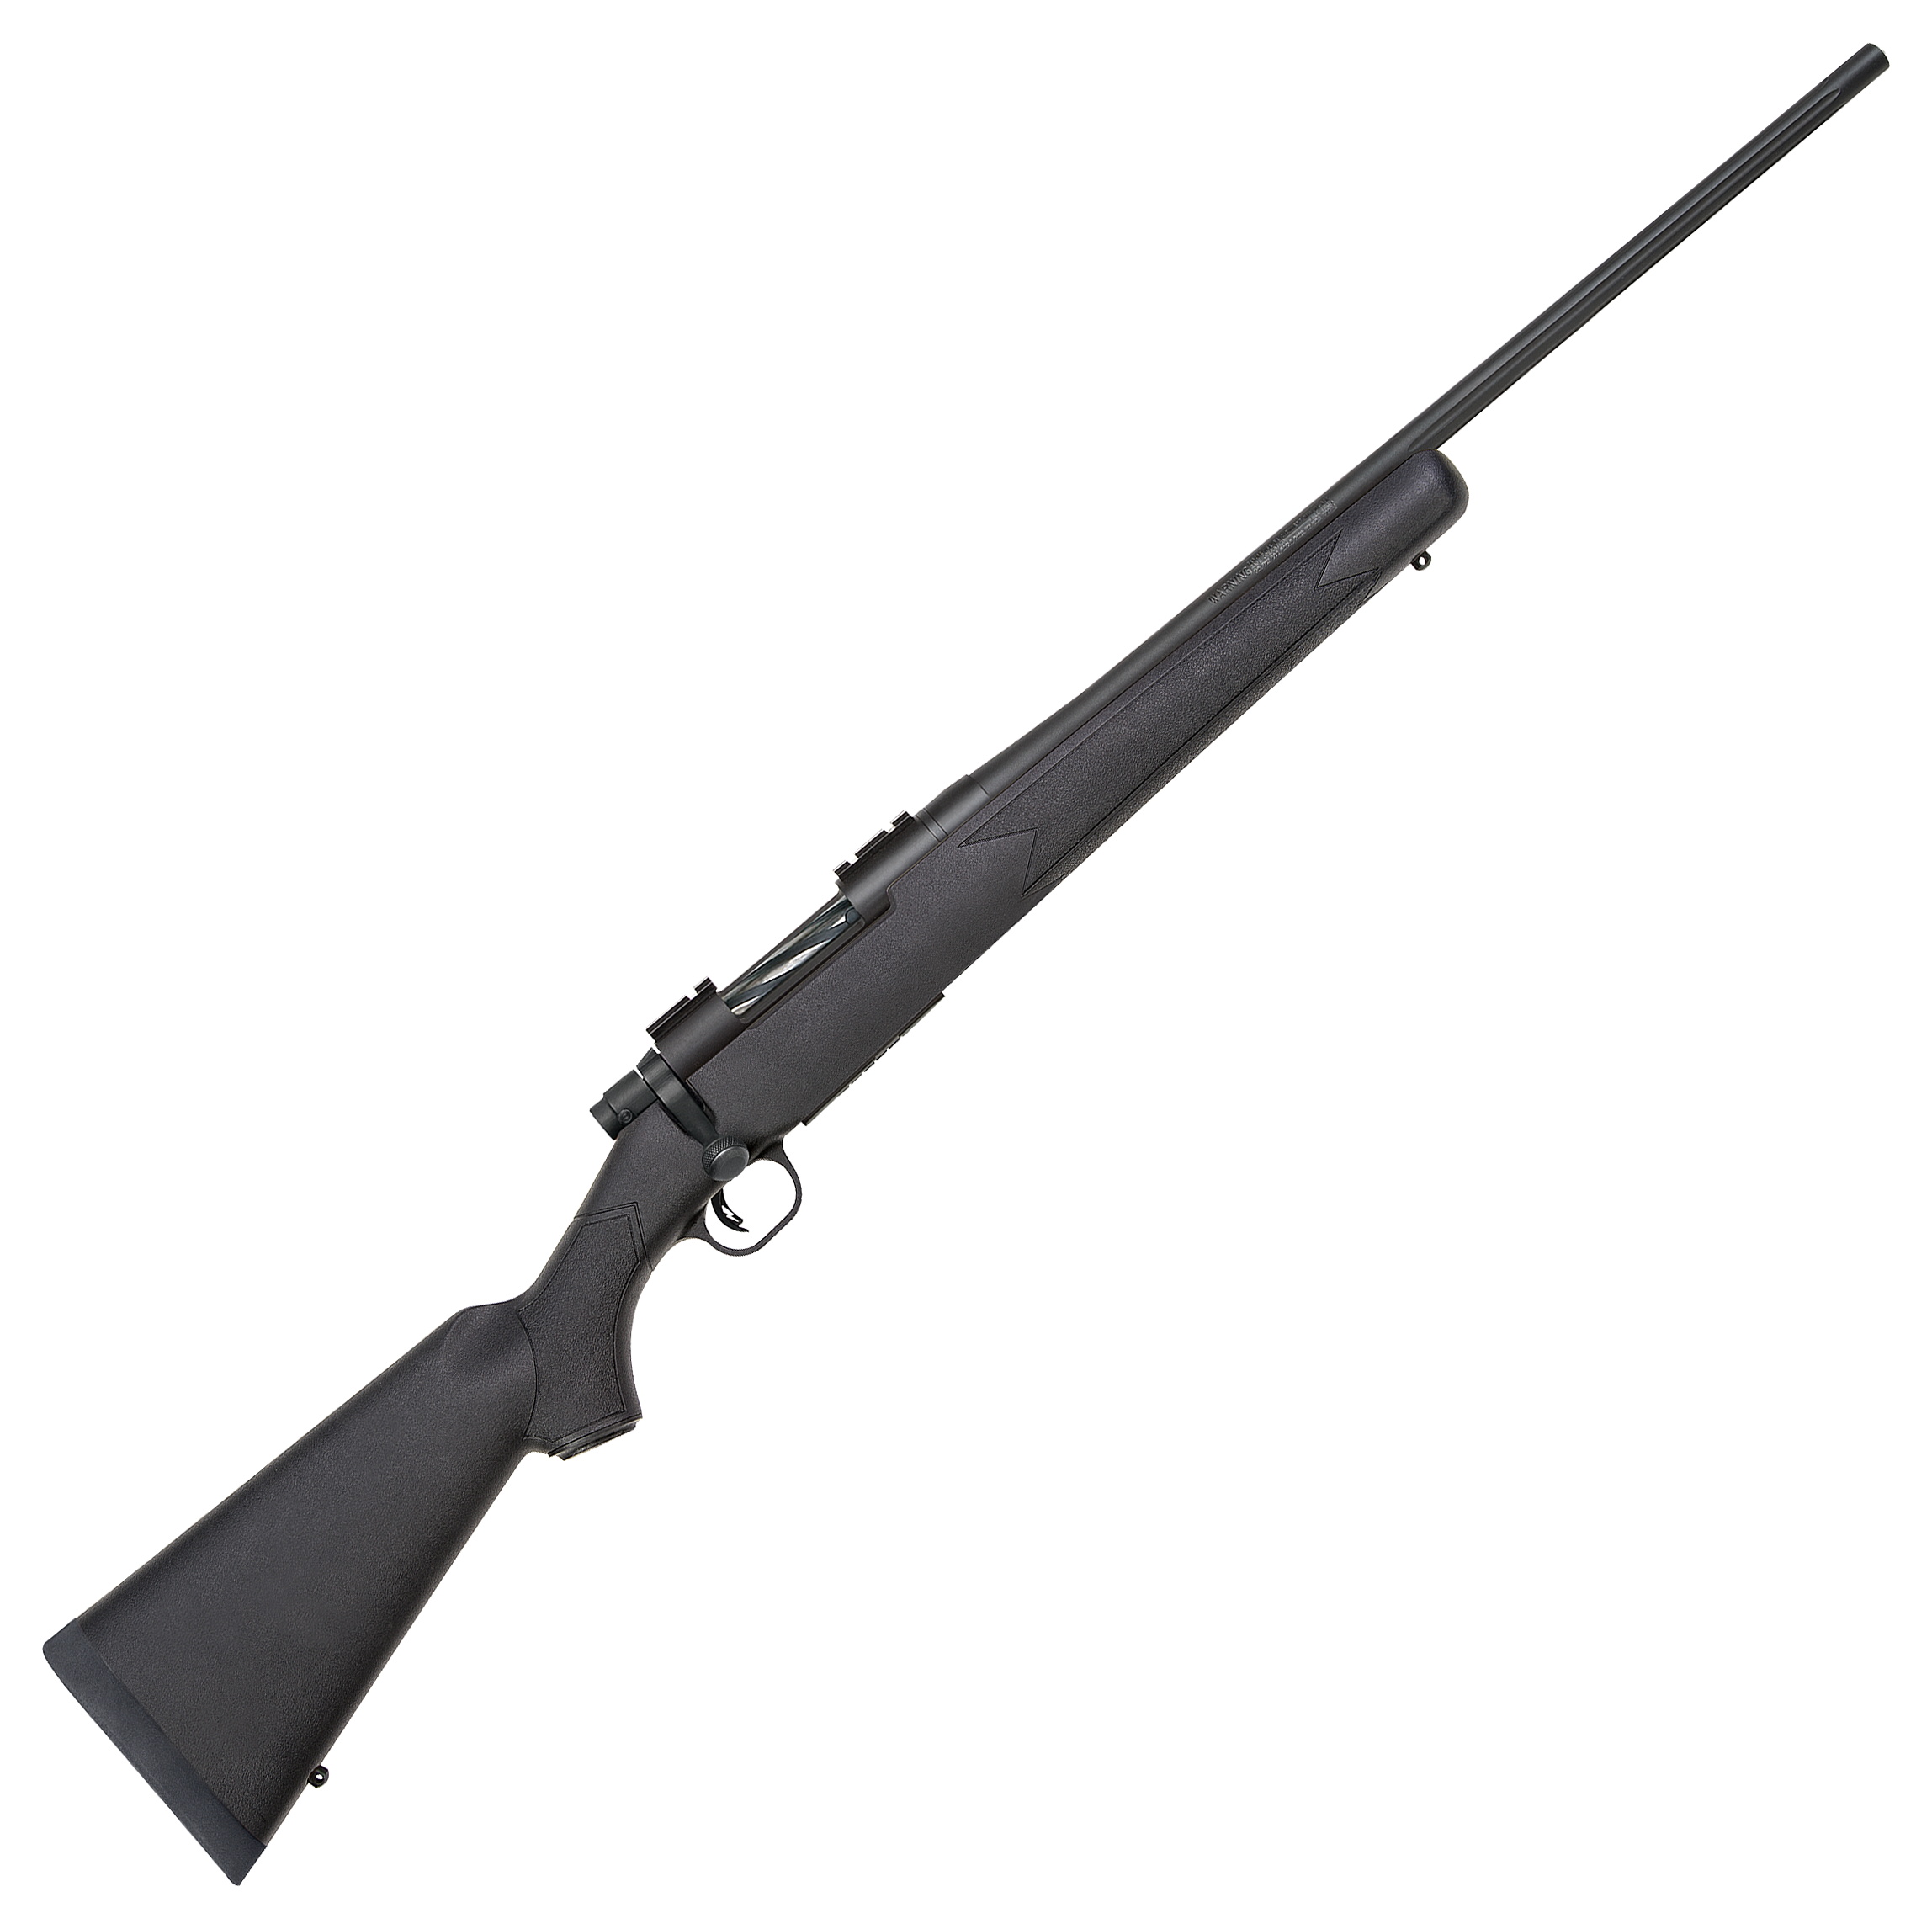 Mossberg 27843 Patriot Bolt Action Rifle 22-250 REM, RH, 22 in, Blue, Syn Stk, 5+1 Rnd, LBA Adj Trgr (163765), 0902-1250